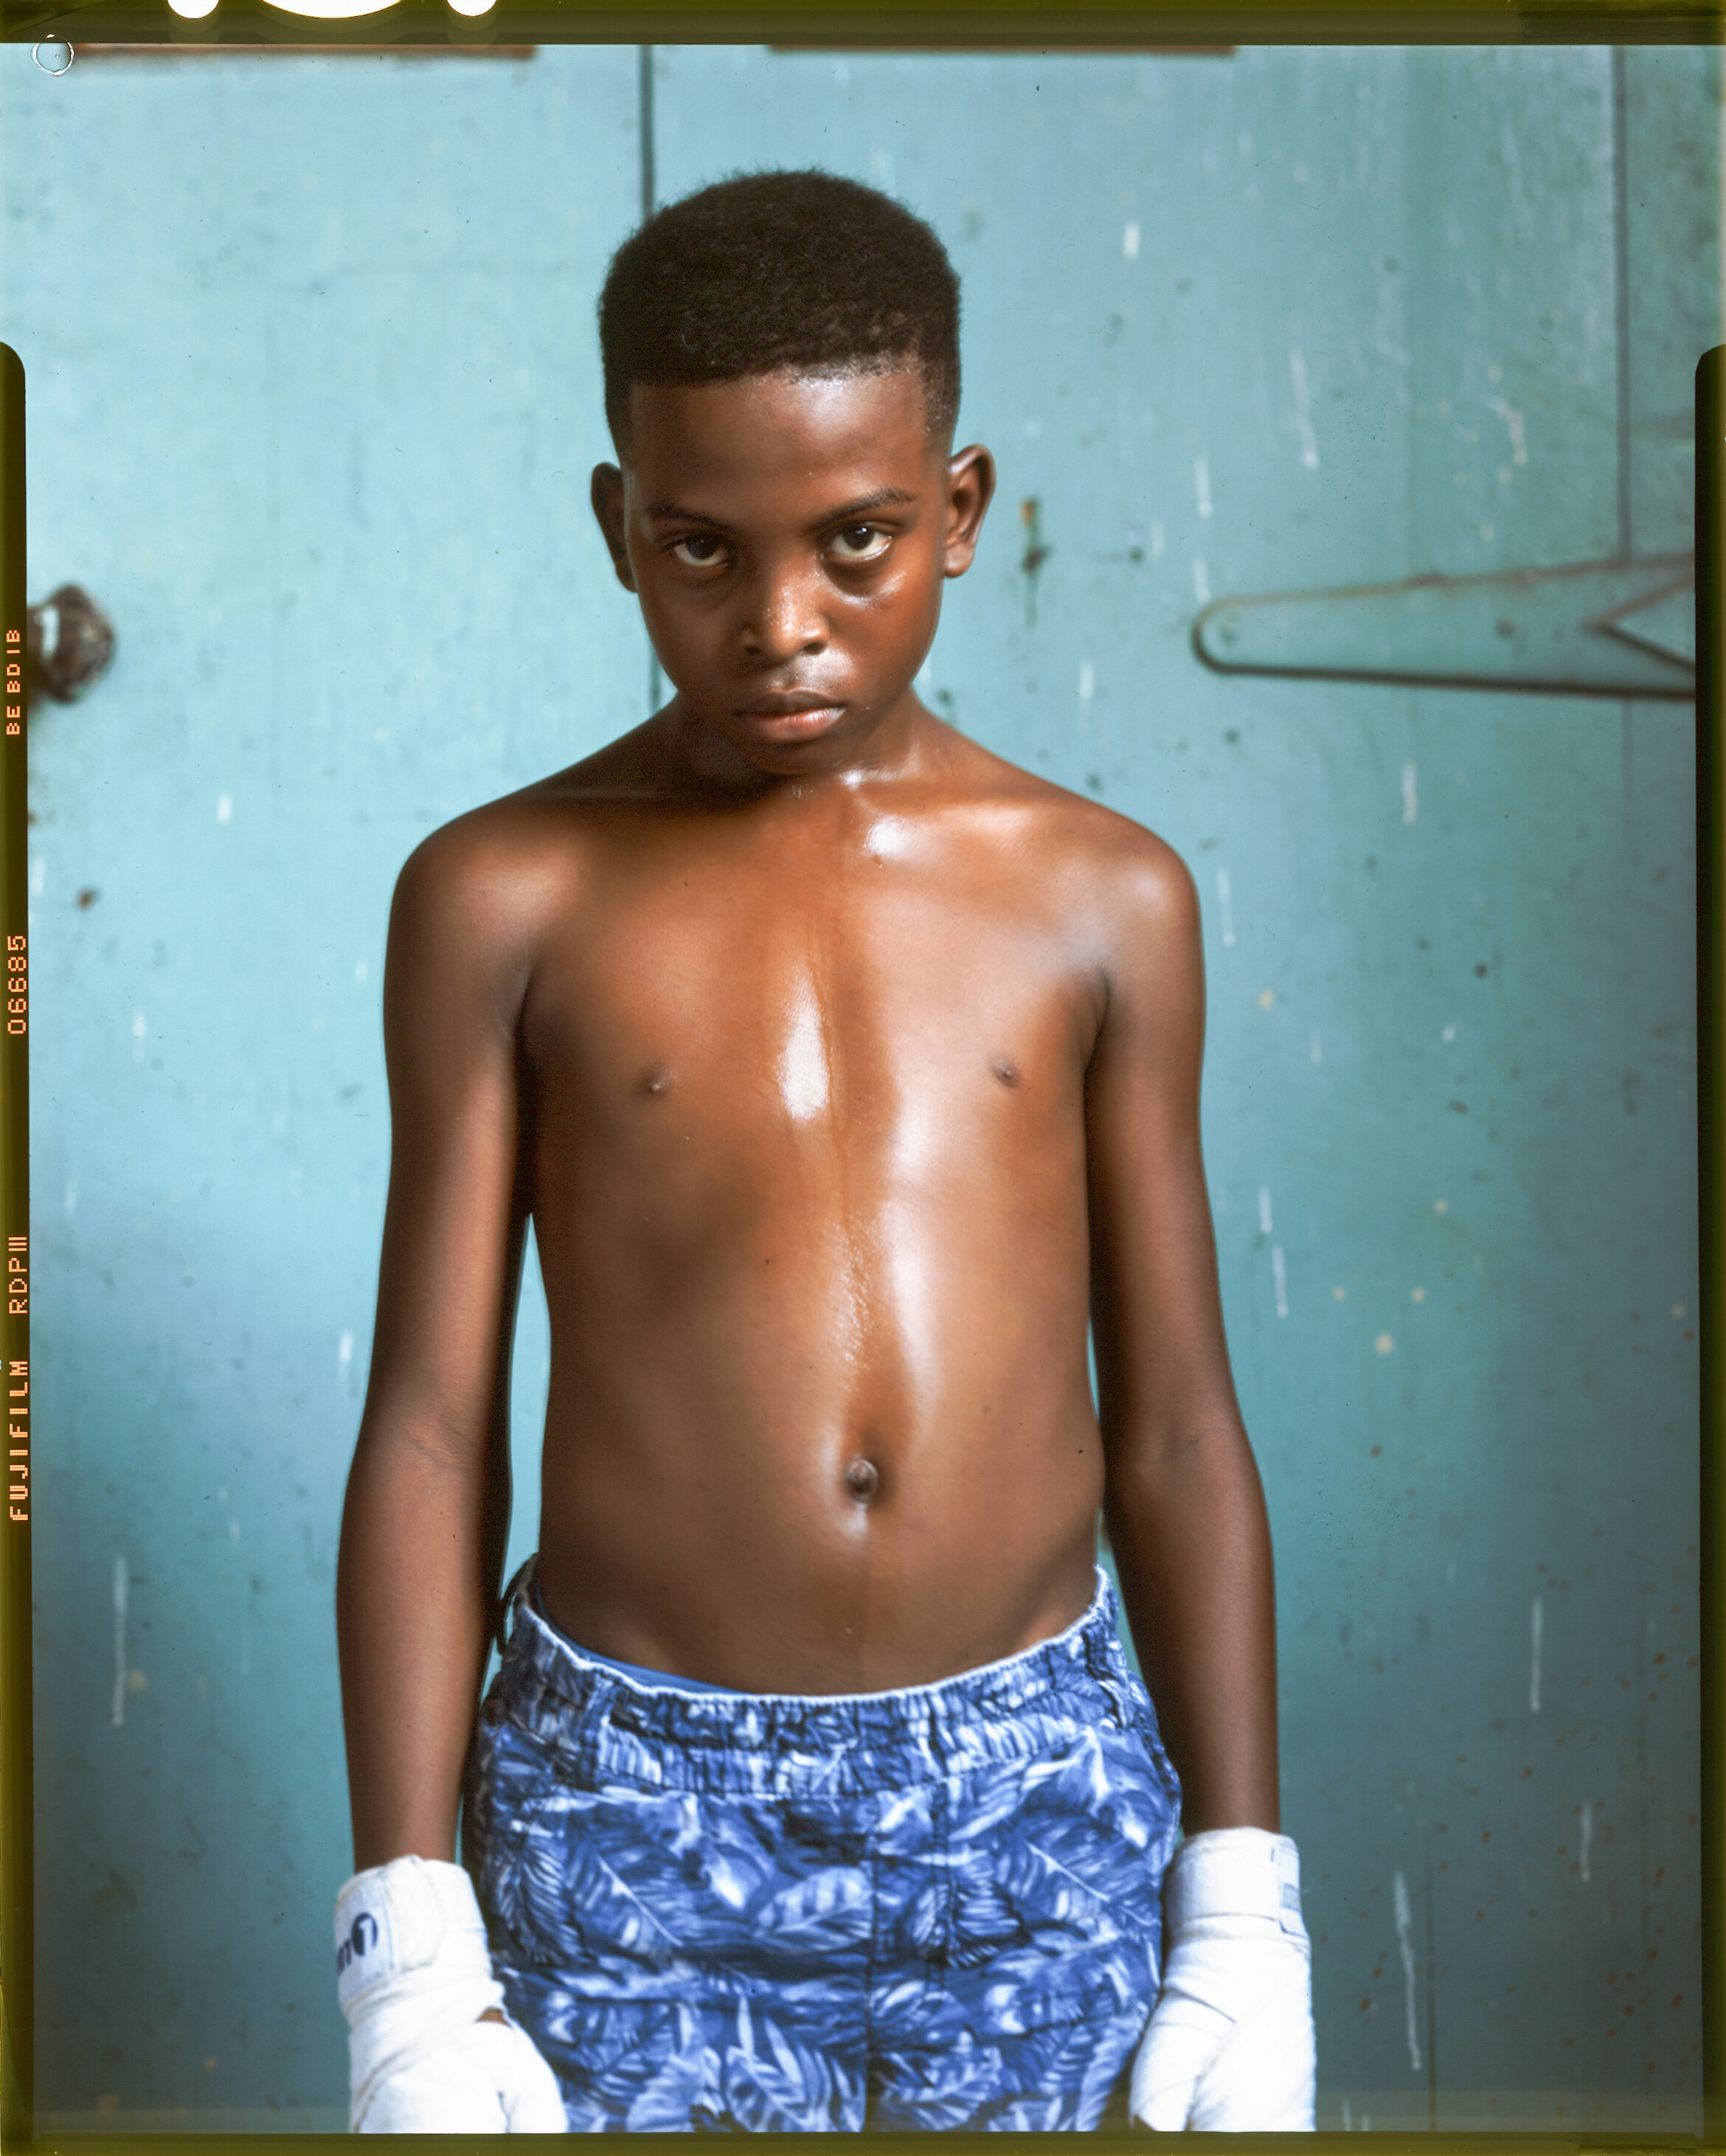 Cuba boxingsaveslives-6.jpg